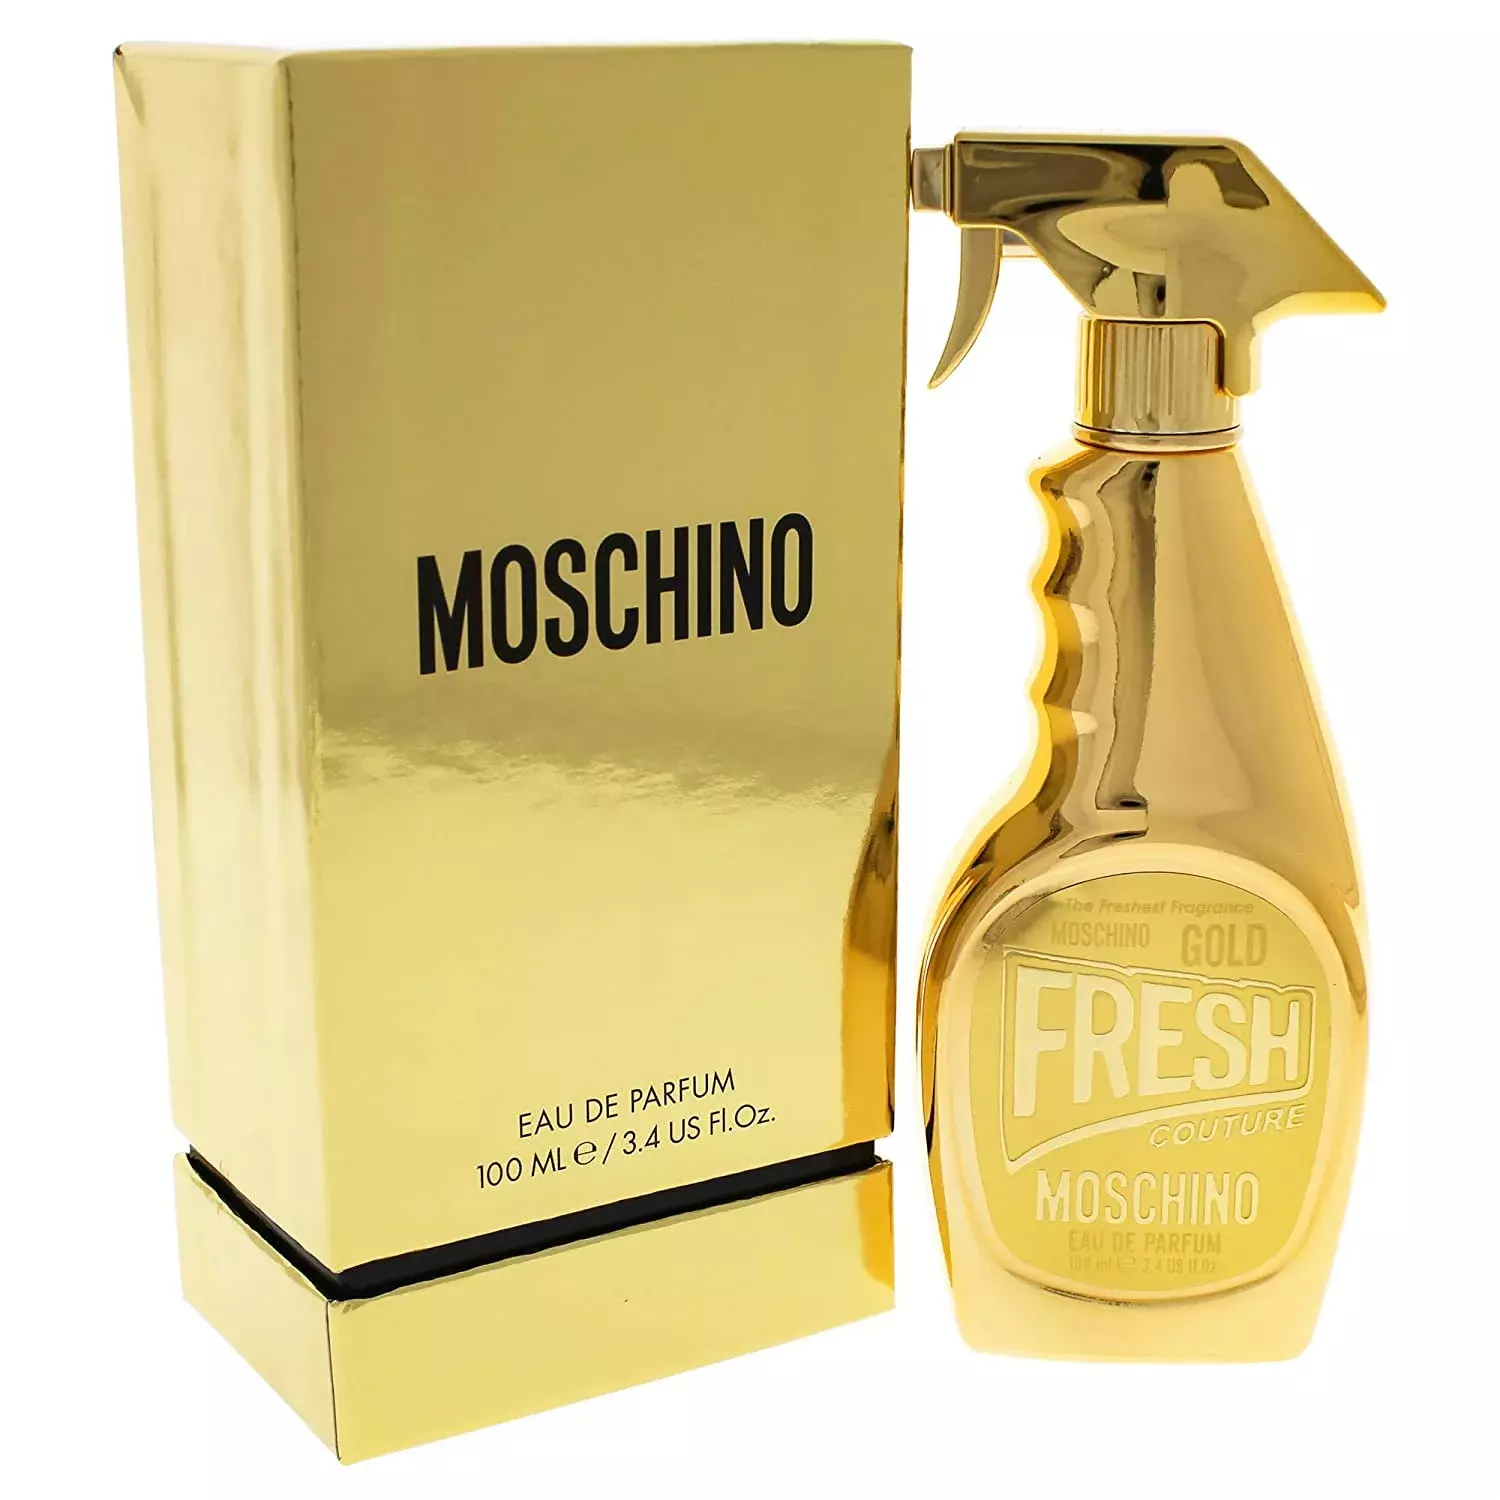 Moschino парфюмерная вода цена. Moschino Gold Fresh Couture. Moschino Fresh Gold EDP 100ml. Moschino Fresh Gold 100 мл. Moschino 30 ml.